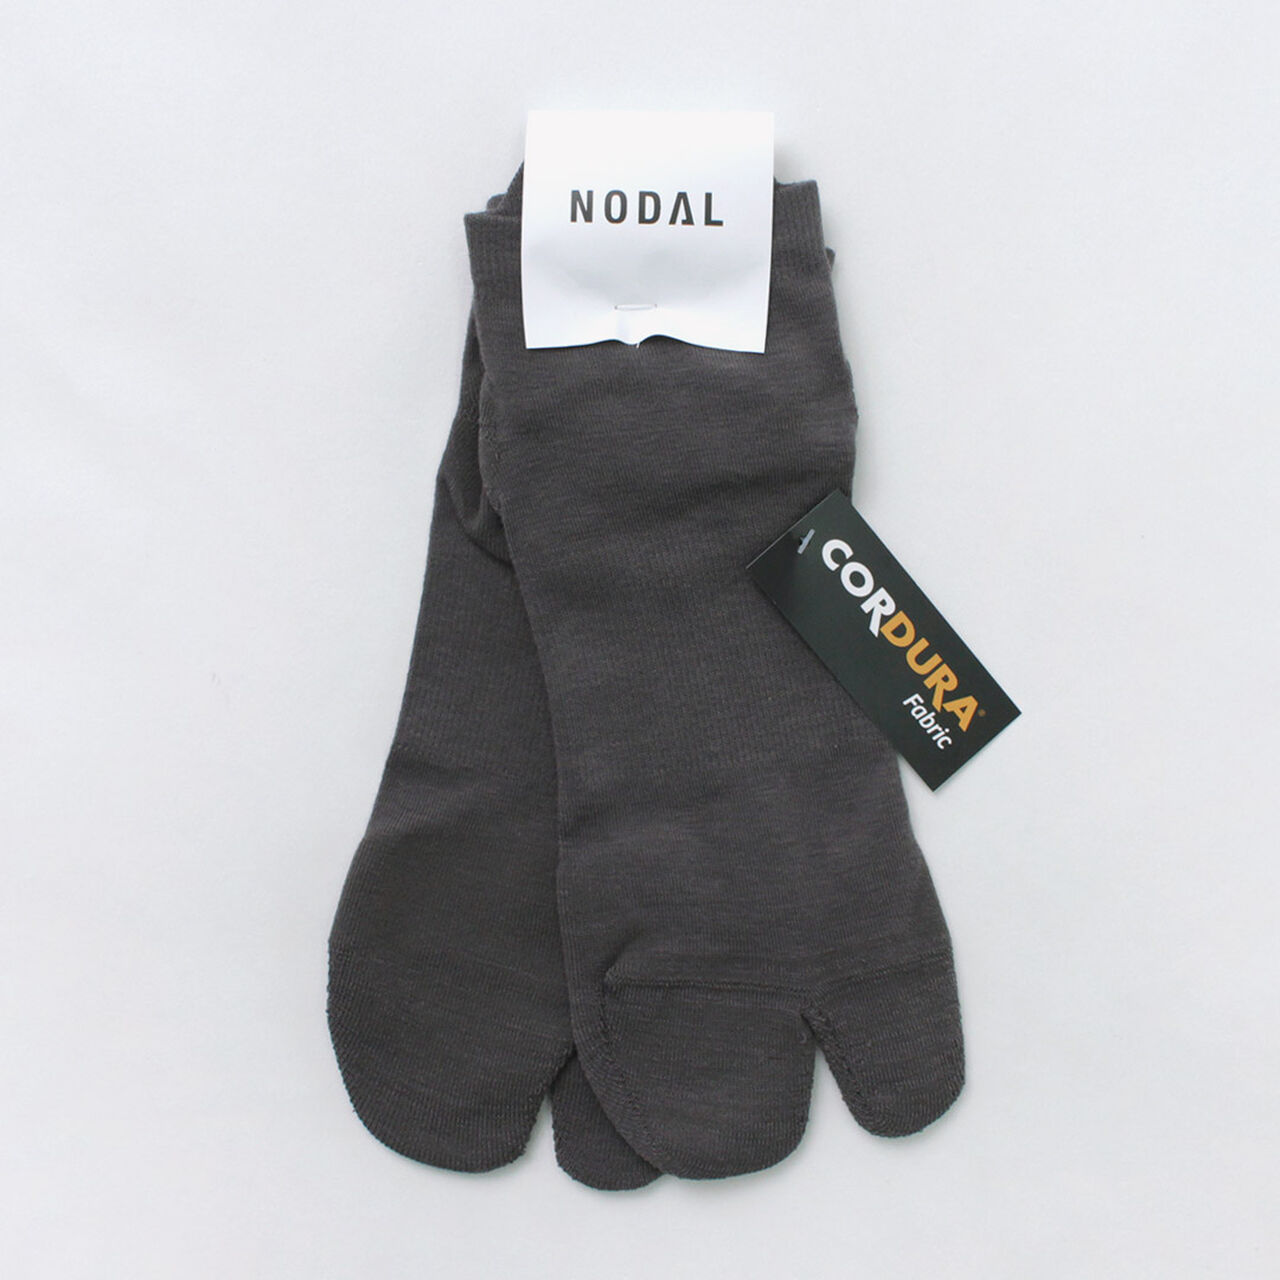 Cordura 60/40 Ankle Socks,Grey, large image number 0